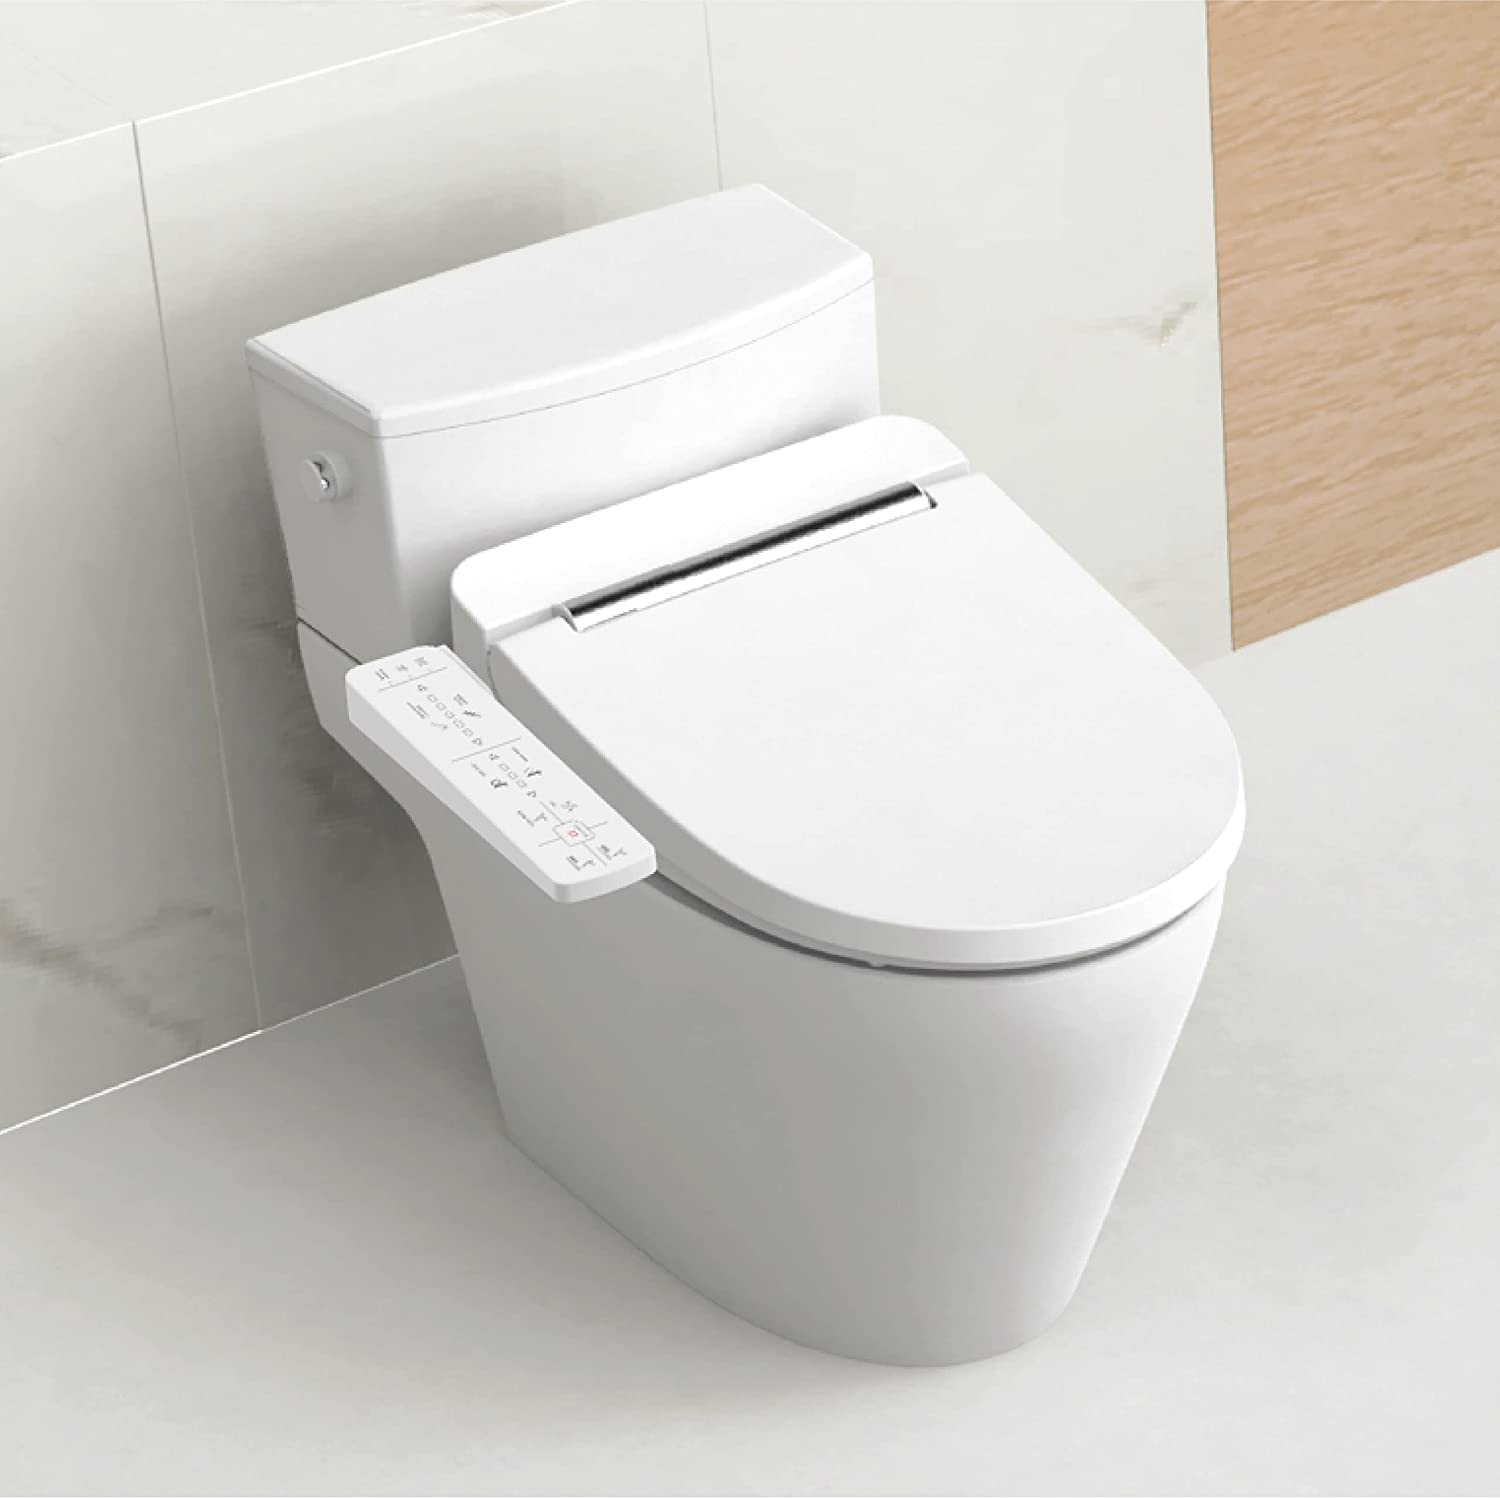 VOVO VB-3000 Electronic Smart Bidet Toilet Seat - White